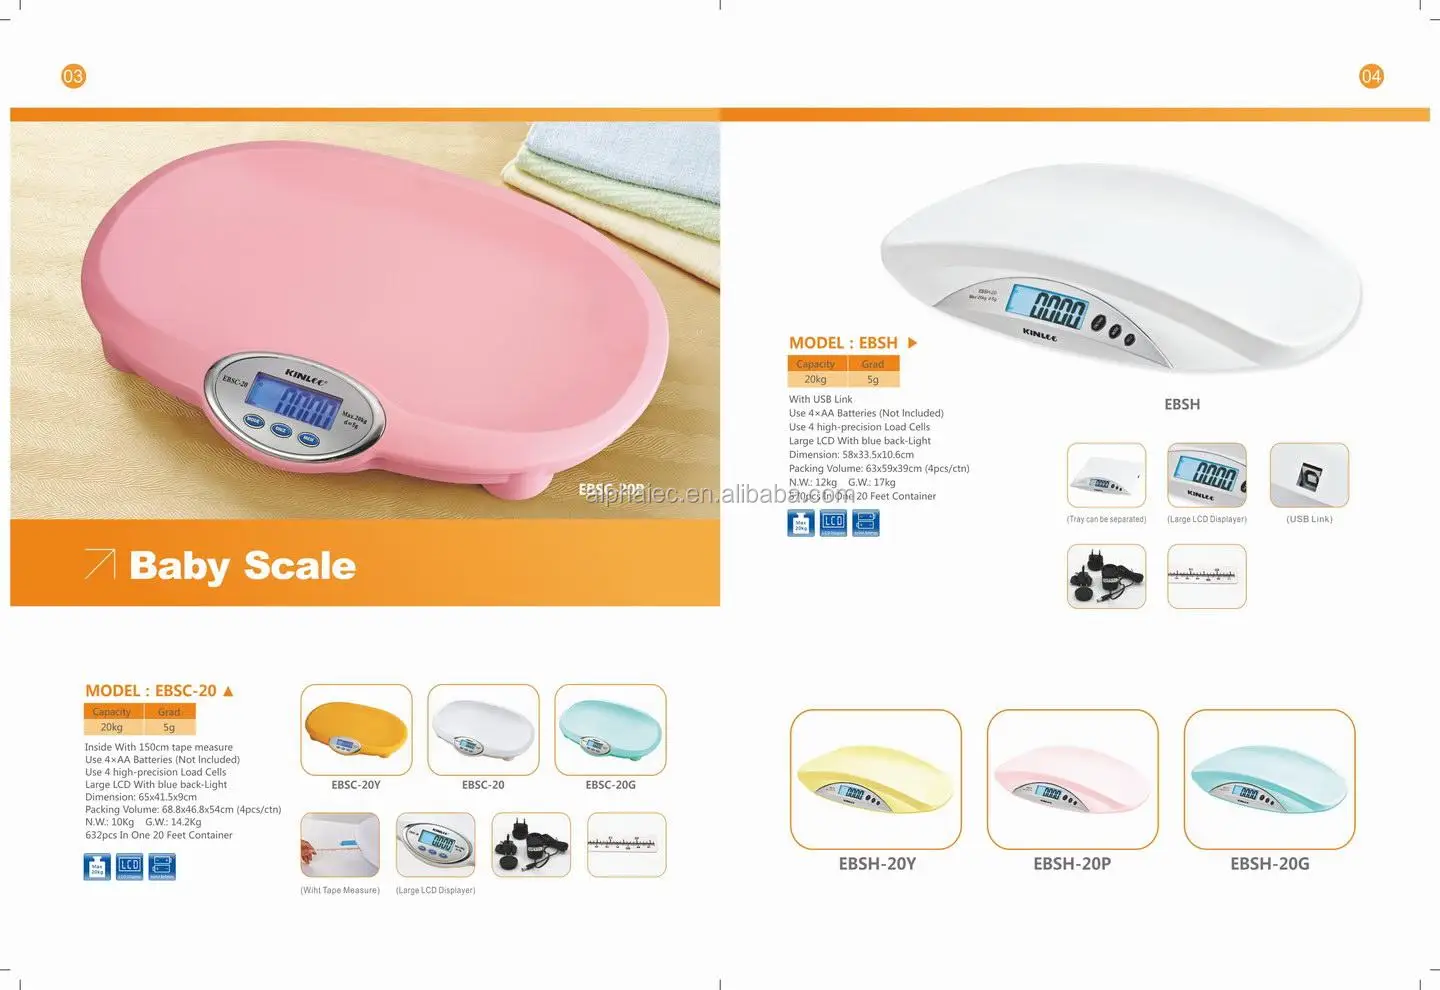 Electronic baby scale - EBSA-20 - Zhongshan Jinli Electronic Weighing  Equipment Co., Ltd - with LCD display / table